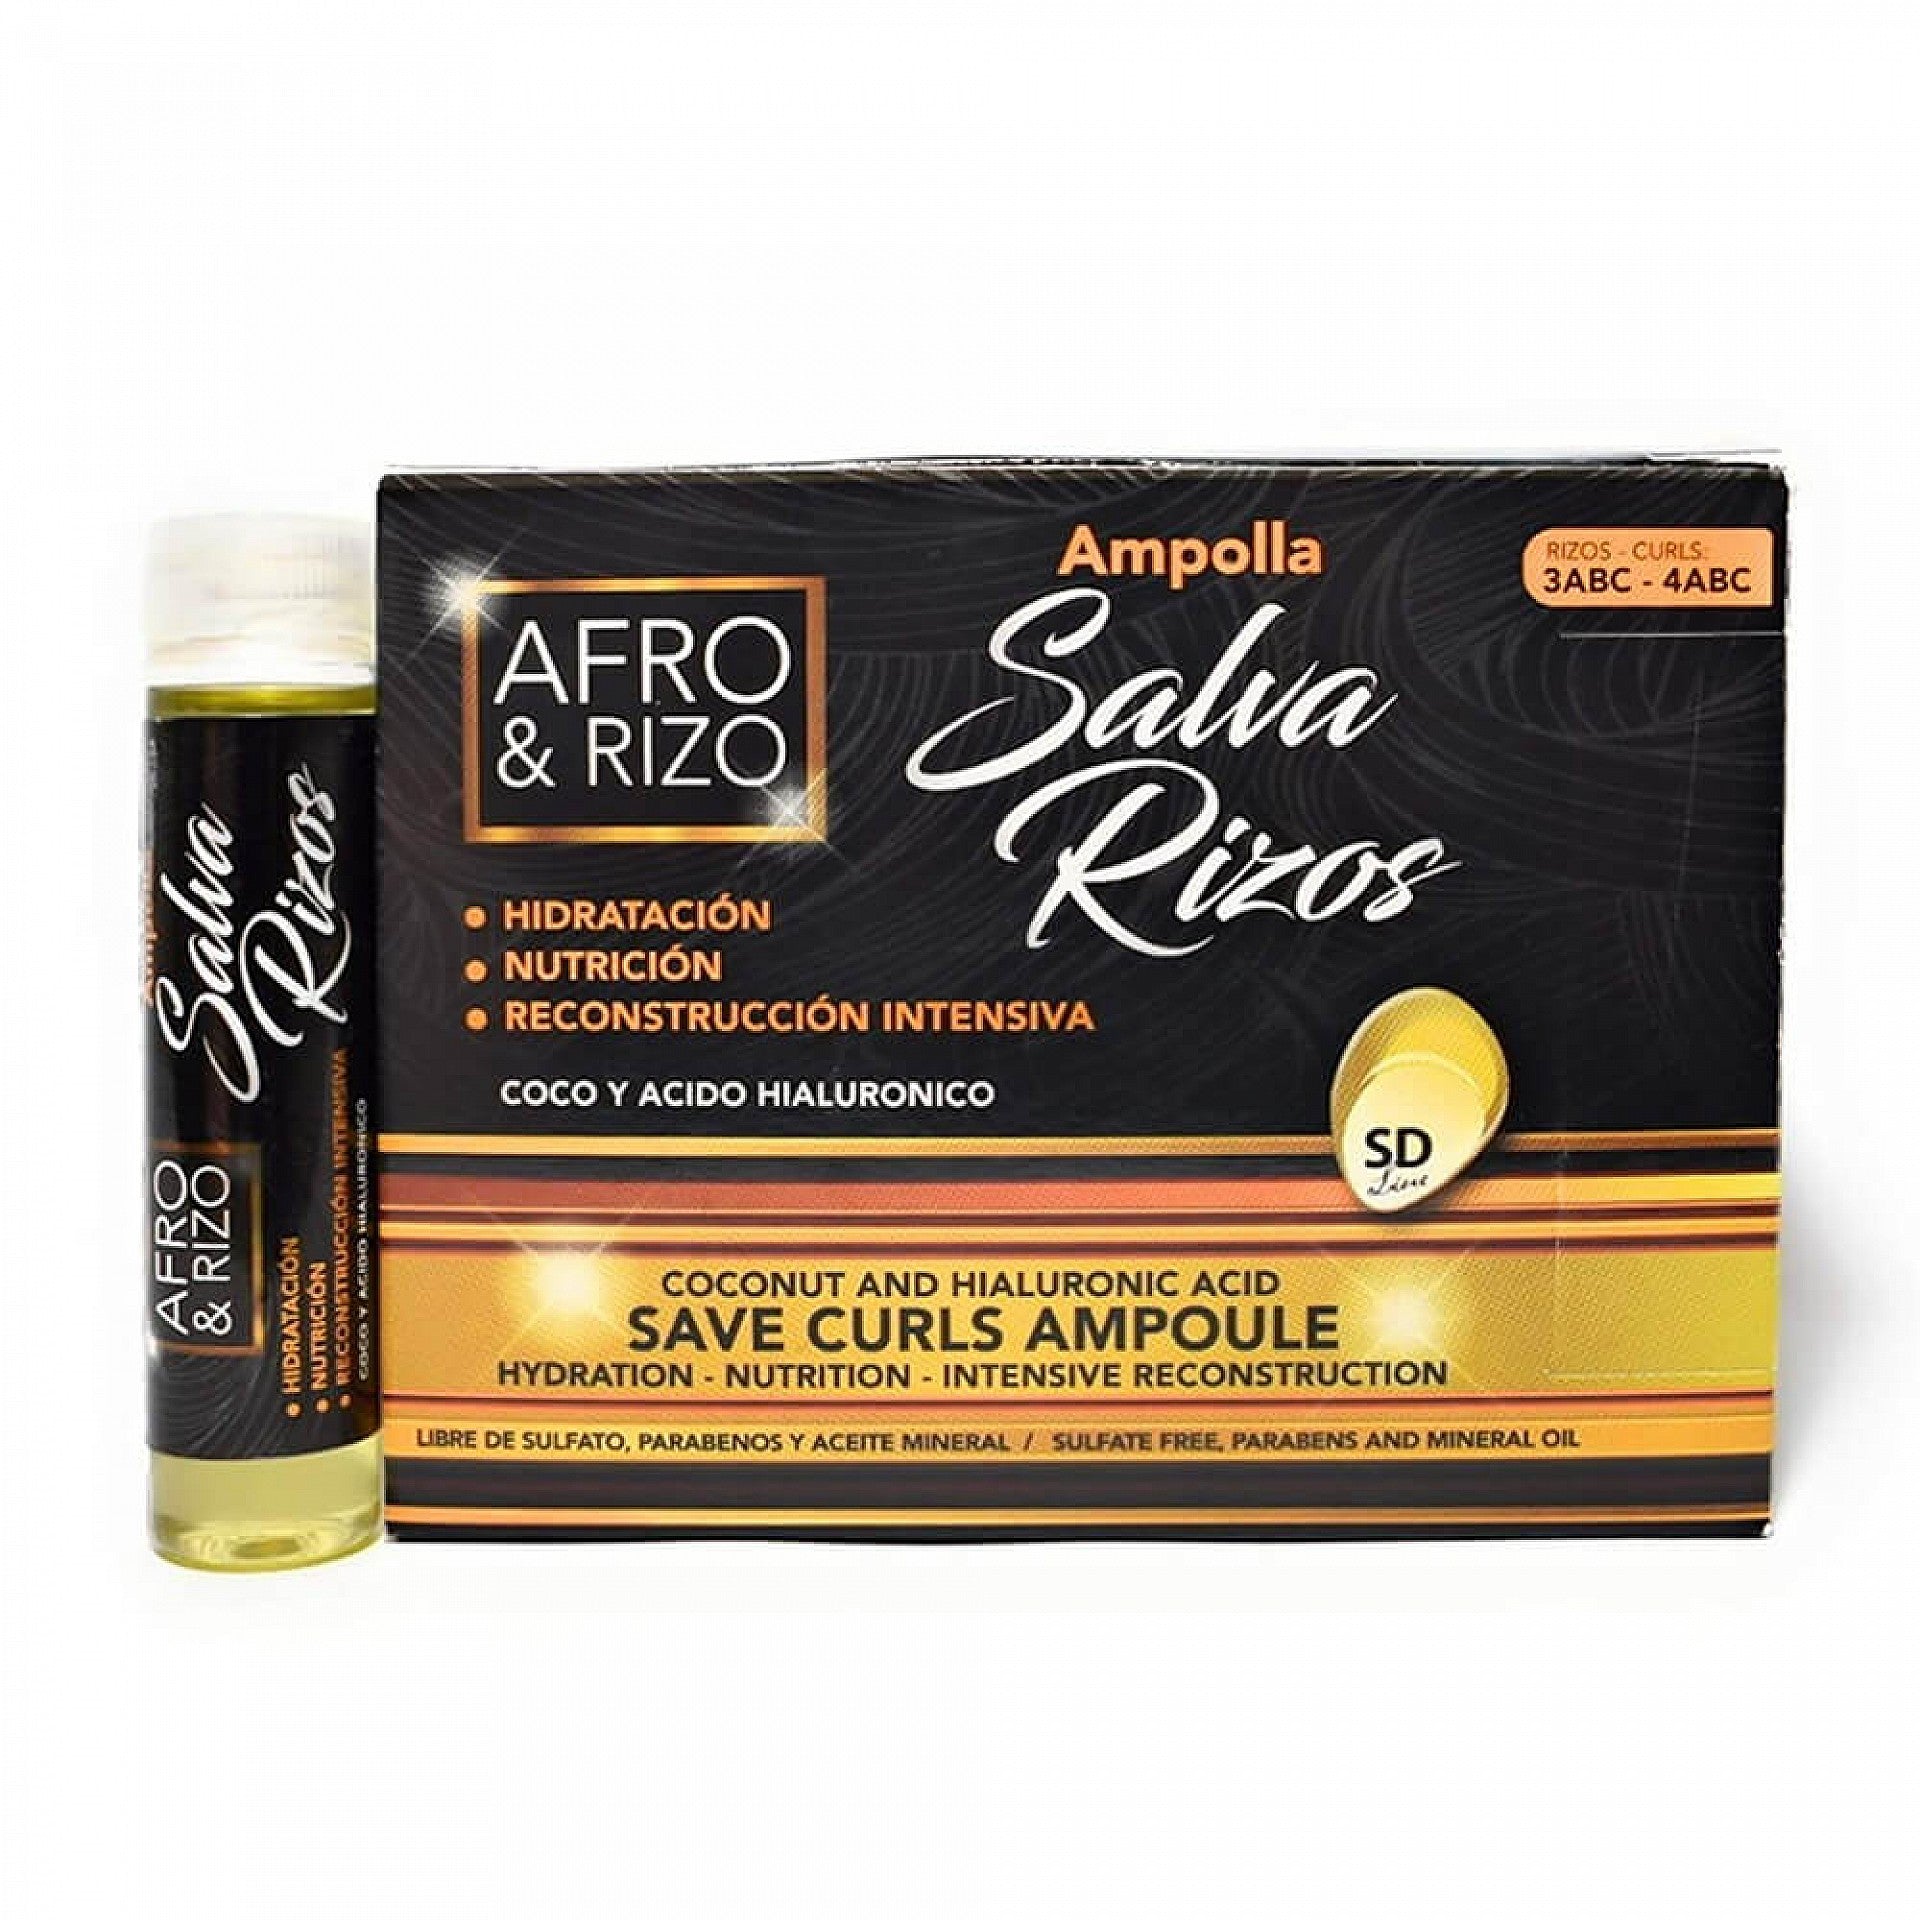 Afro & Rizo Save Curls Ampoule